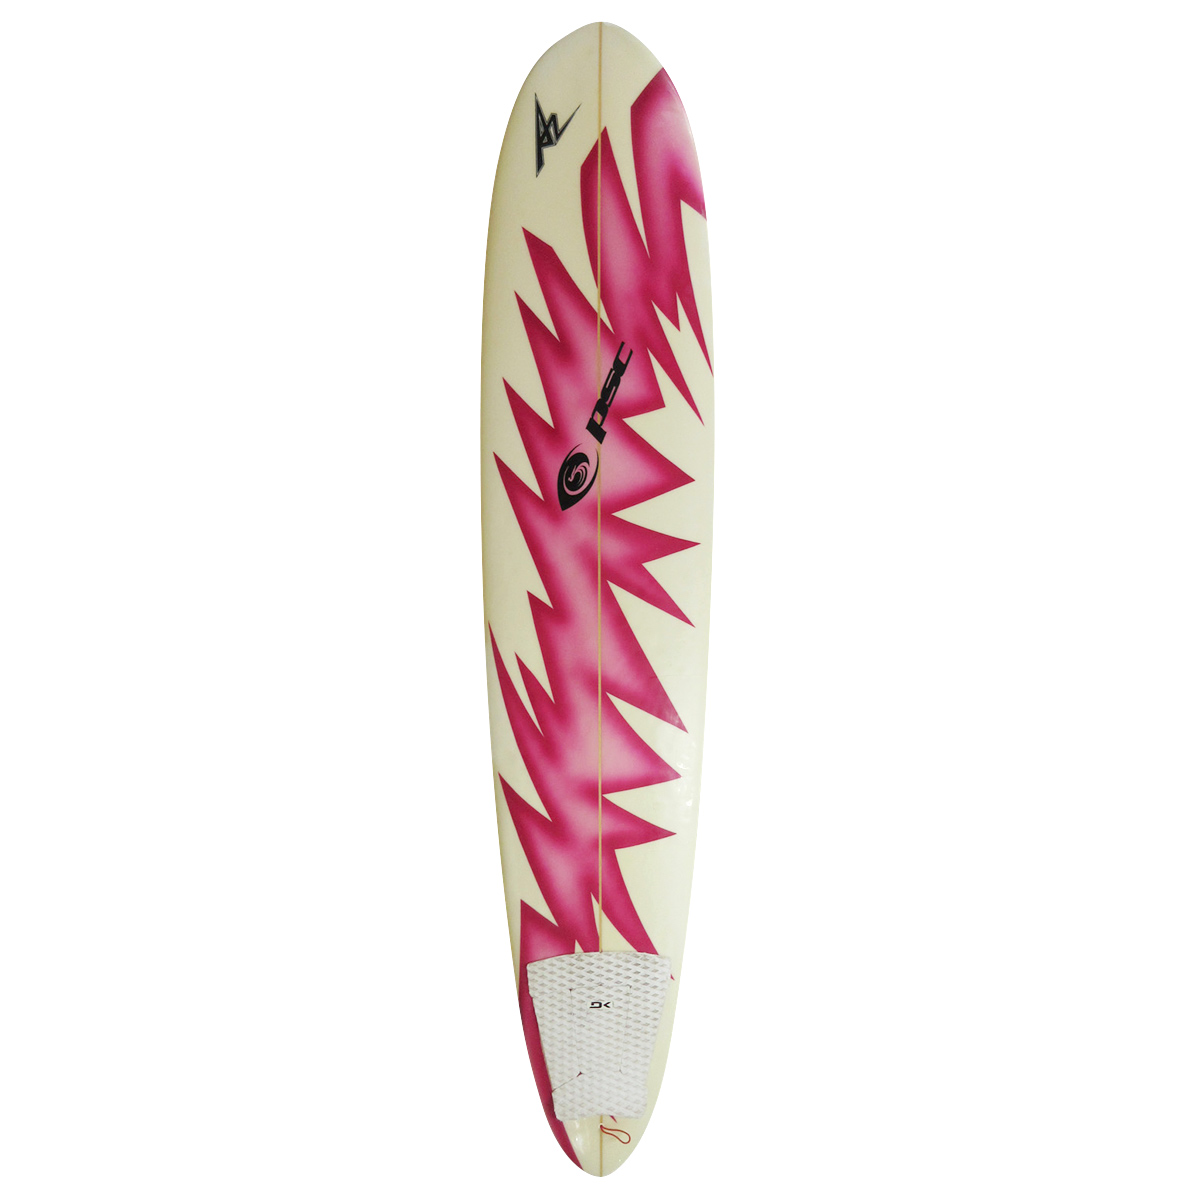 PSC Surfboards / CNZY Model 9`1 Shaped by AZ